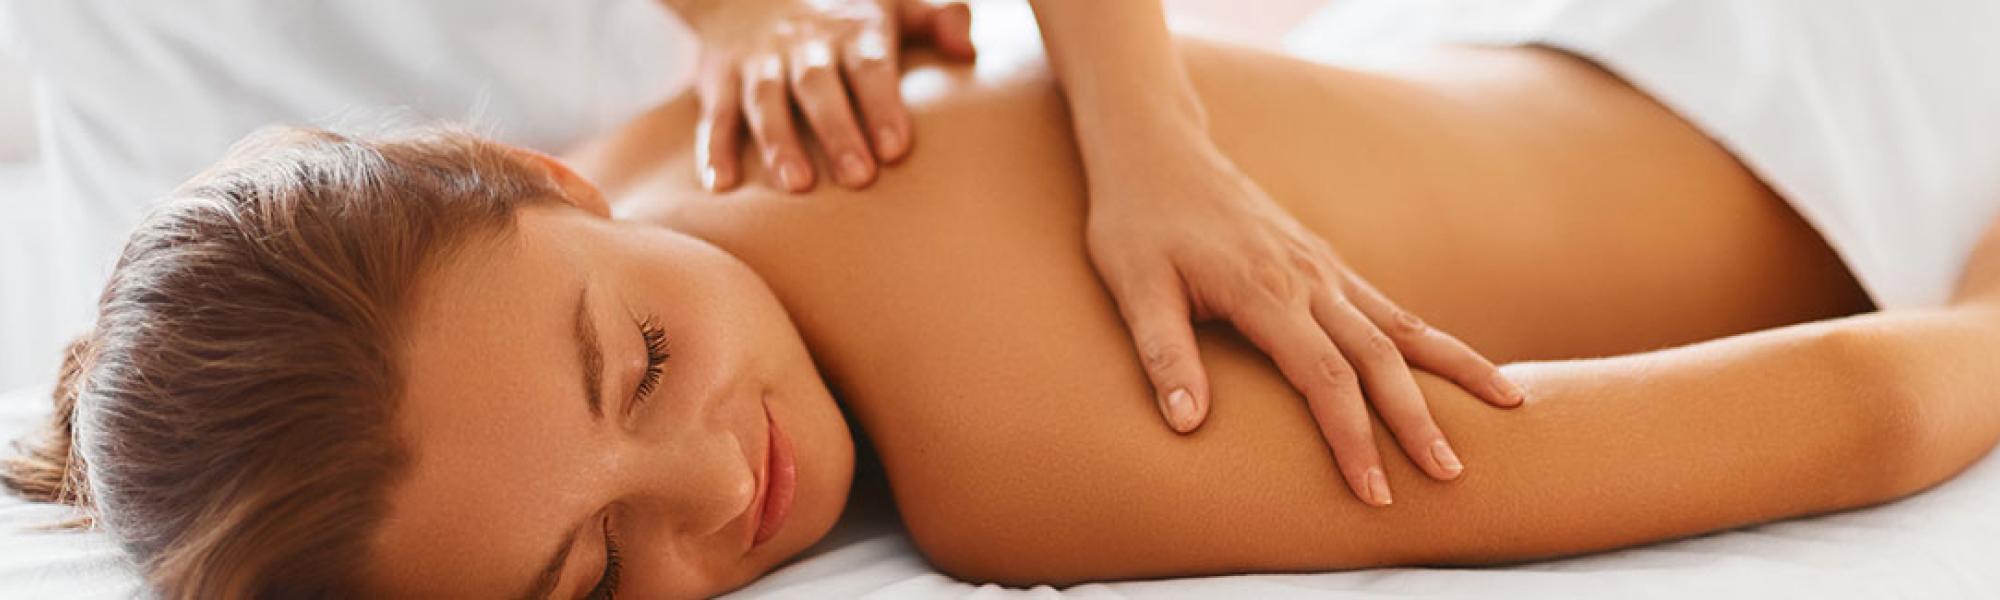 Massage Services at Dosha Salon Spa - Portland